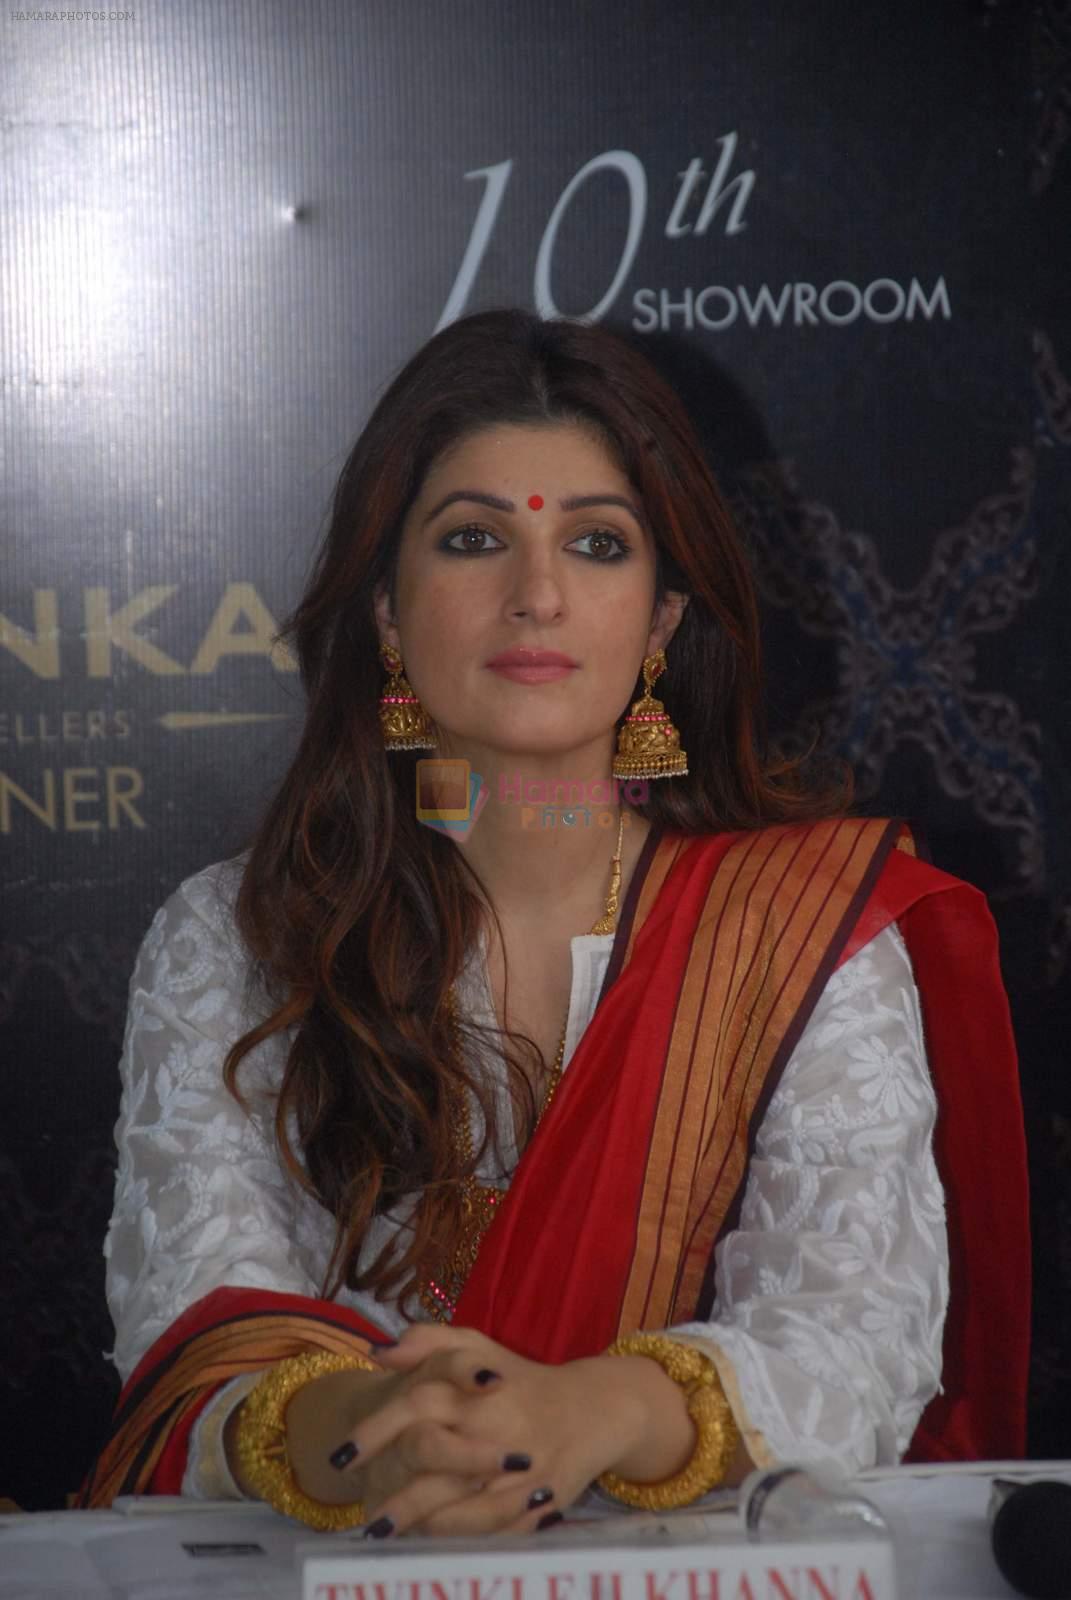 Twinkle Khanna inaugurates RANKA jewelllers 10th showroom at Baner , Pune on 3rd Dec 2015